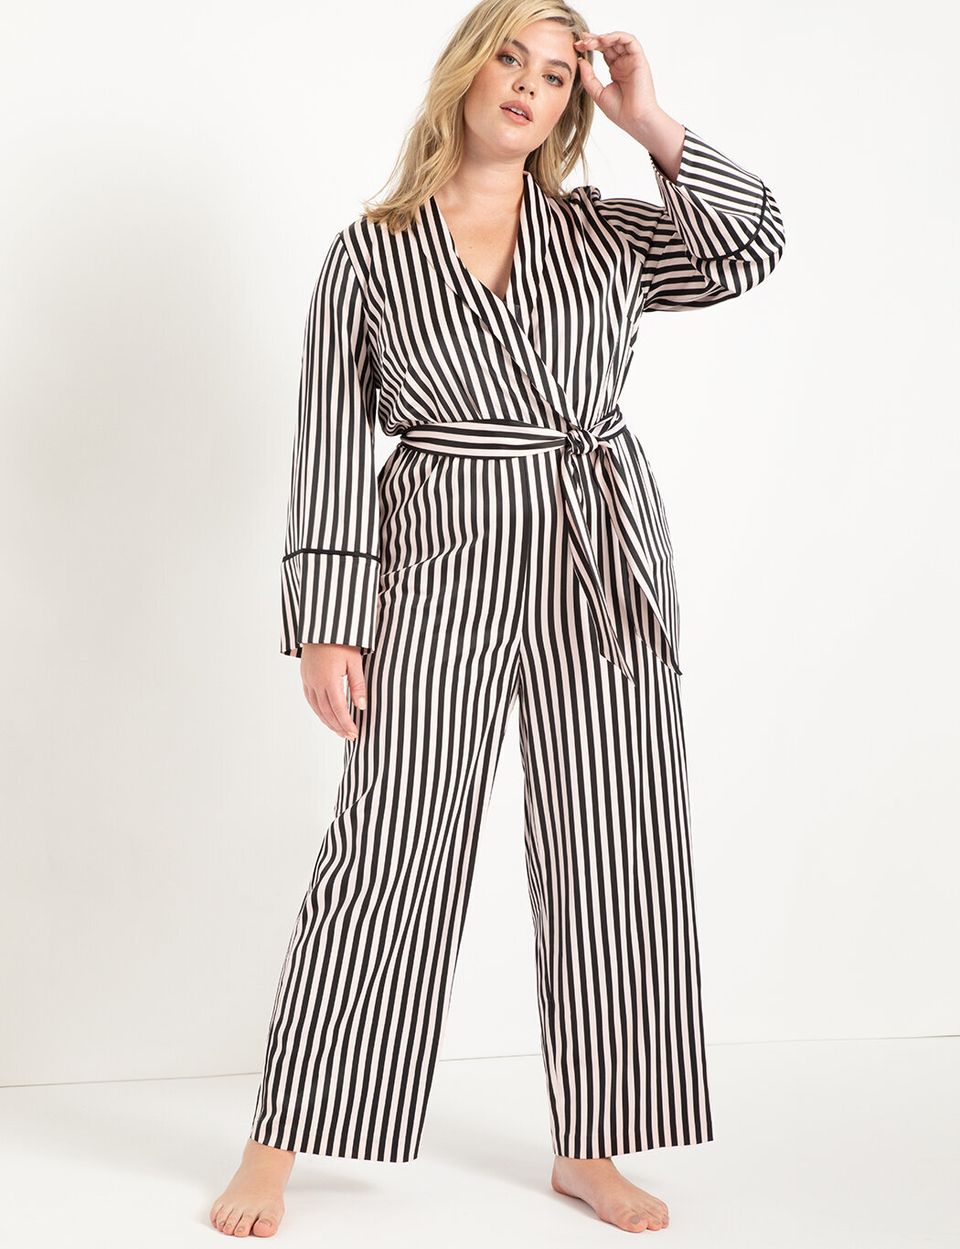 A lounge jumpsuit that looks like dressy pajamas